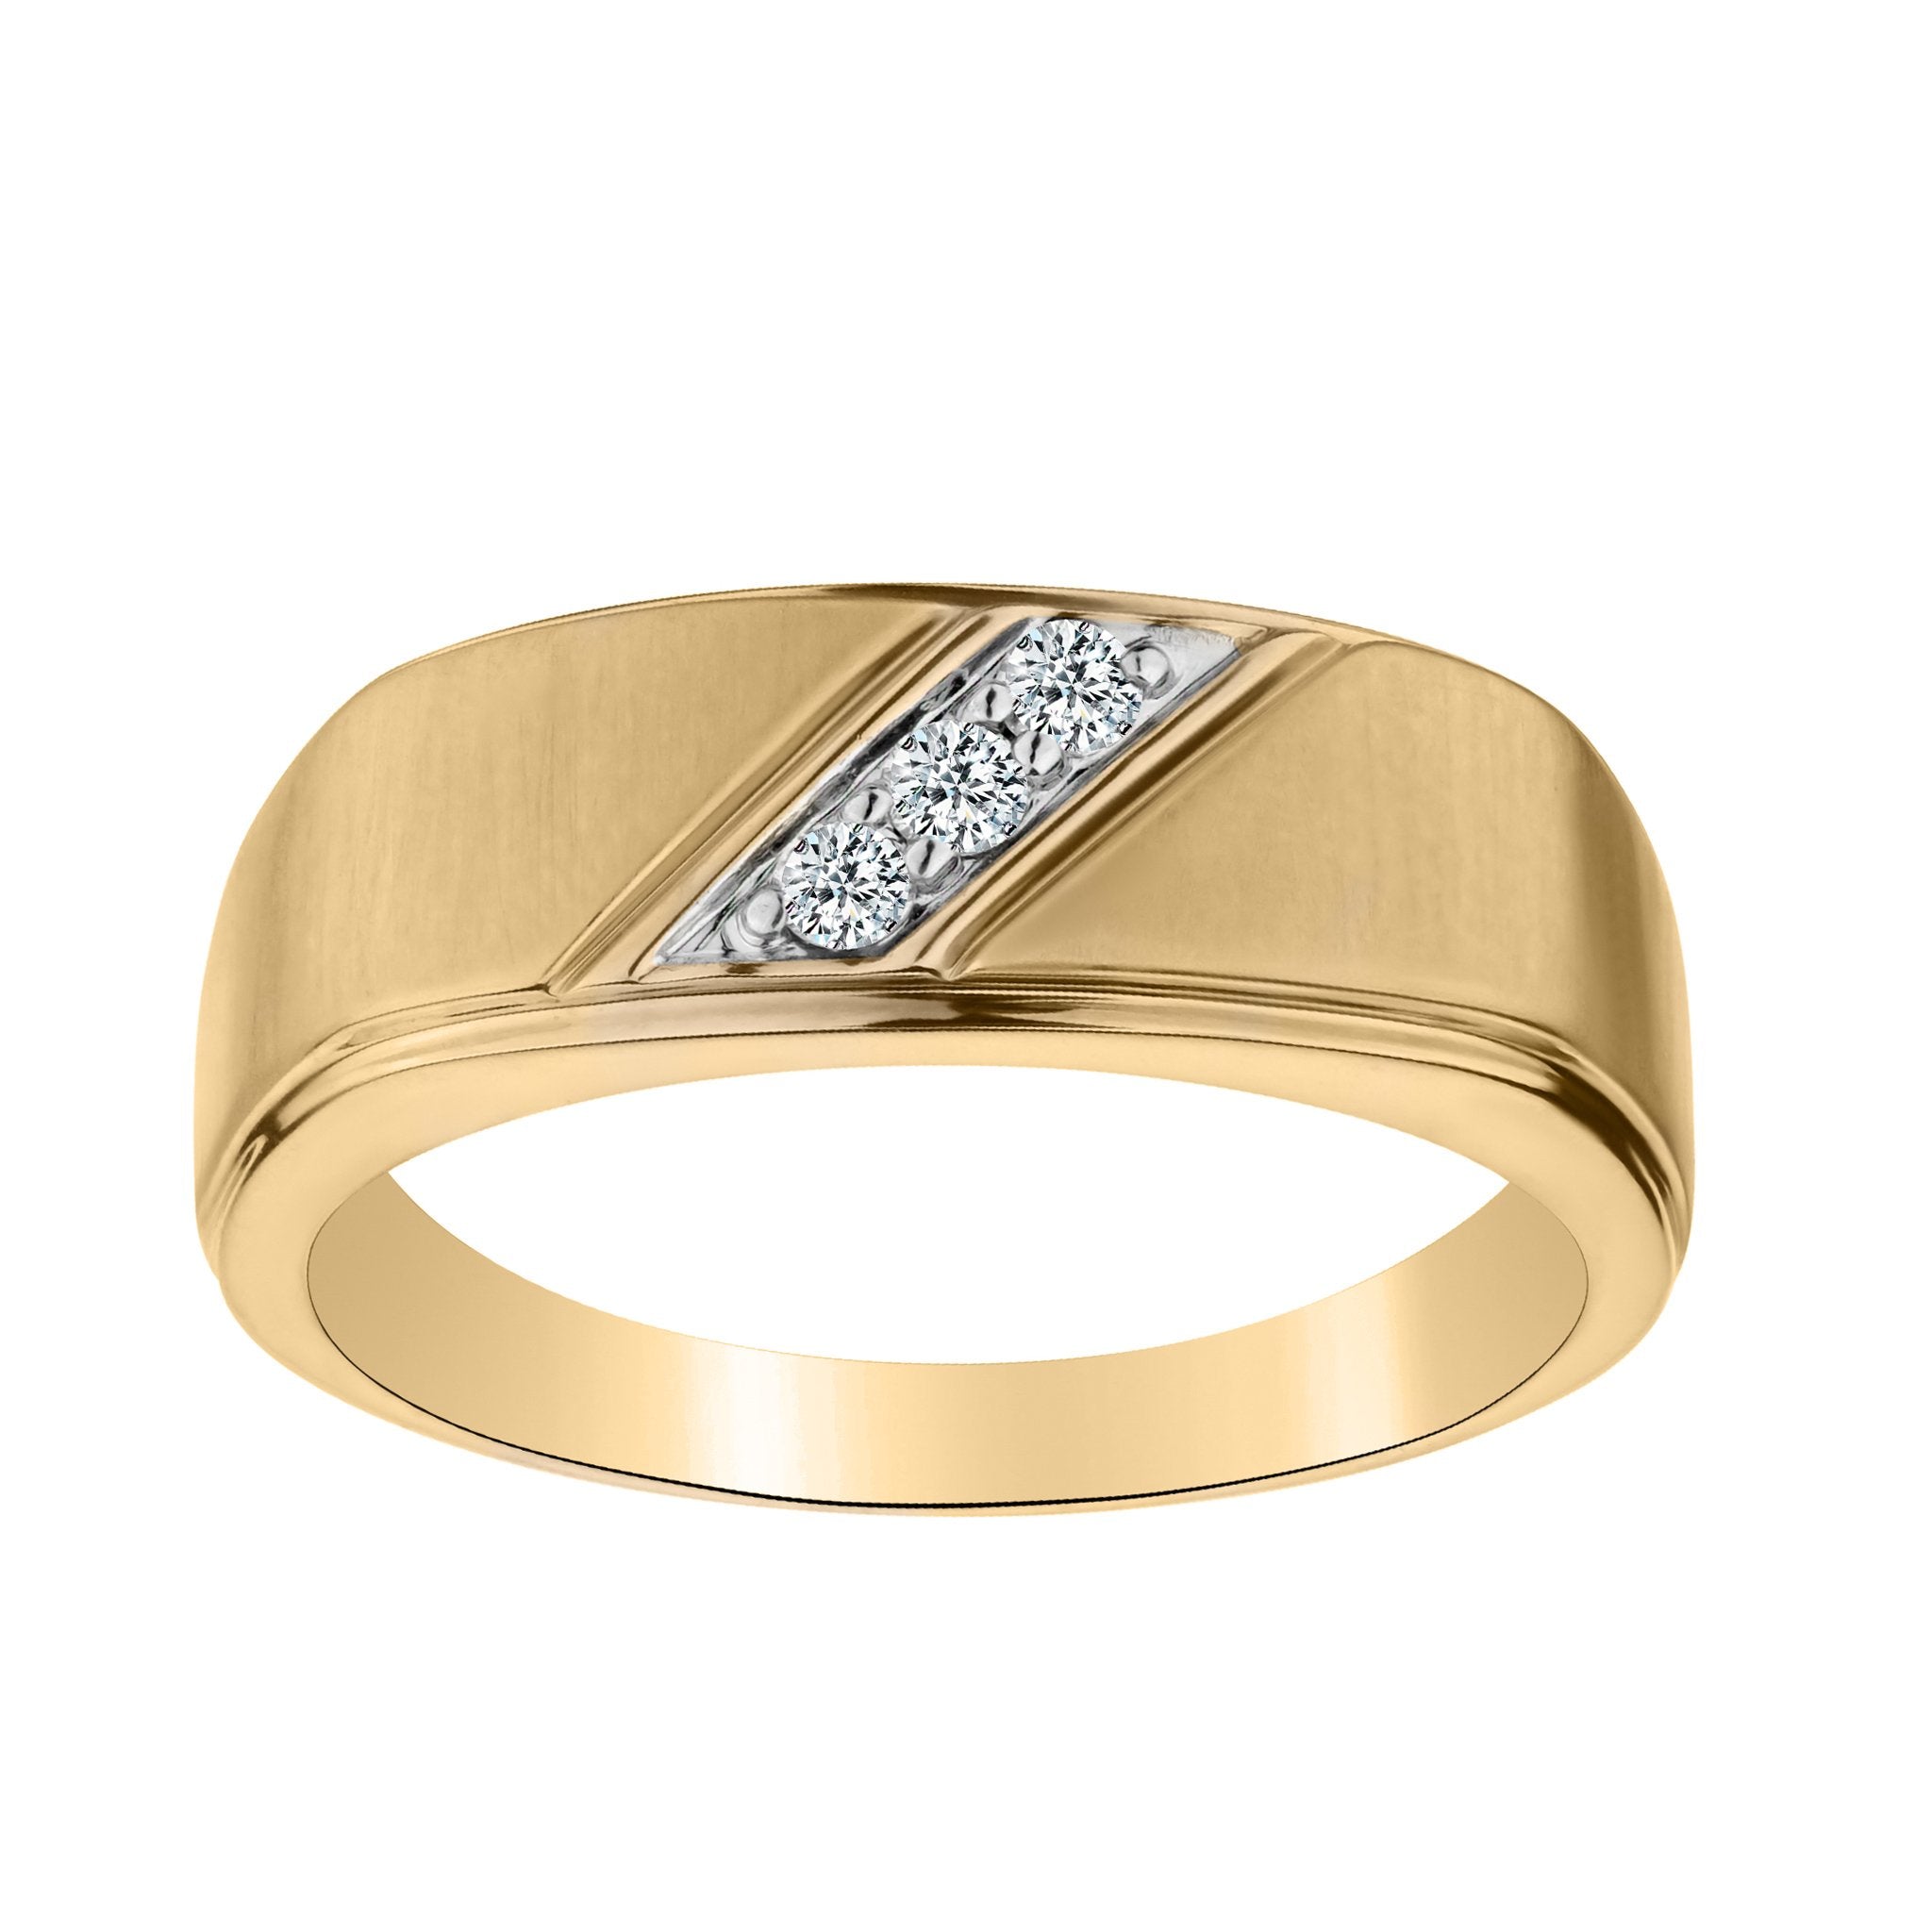 .15 CARAT DIAMOND GENTLEMAN'S RING, 10kt YELLOW GOLD. Men’s Rings. - Griffin Jewellery Designs